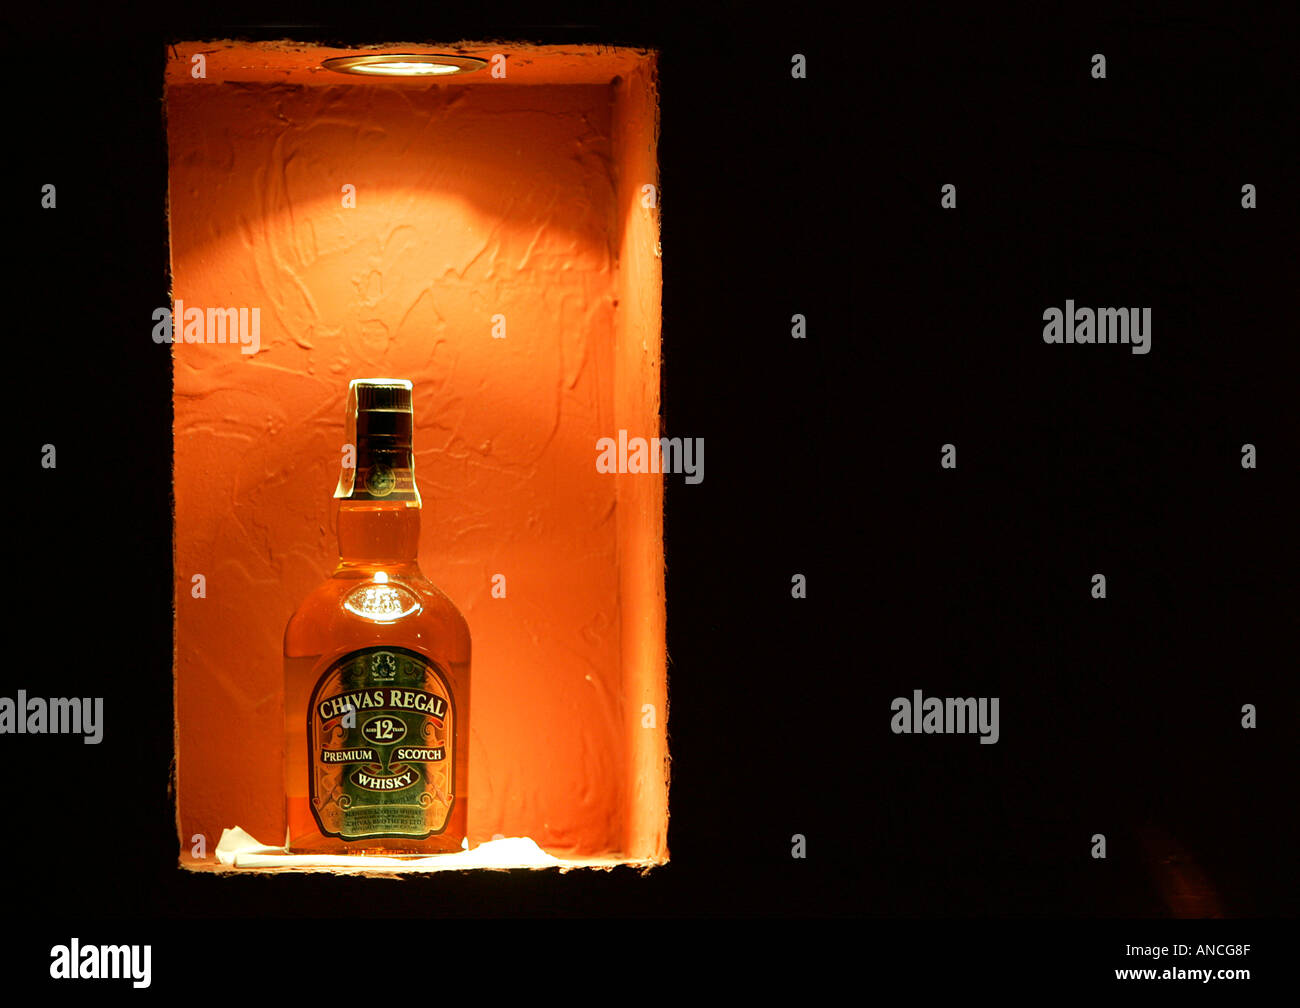 Chivas Regal whisky premium scotch 12 years old alcohol beverage Night bar restaurant beach orange light dark alone one bottle d Stock Photo